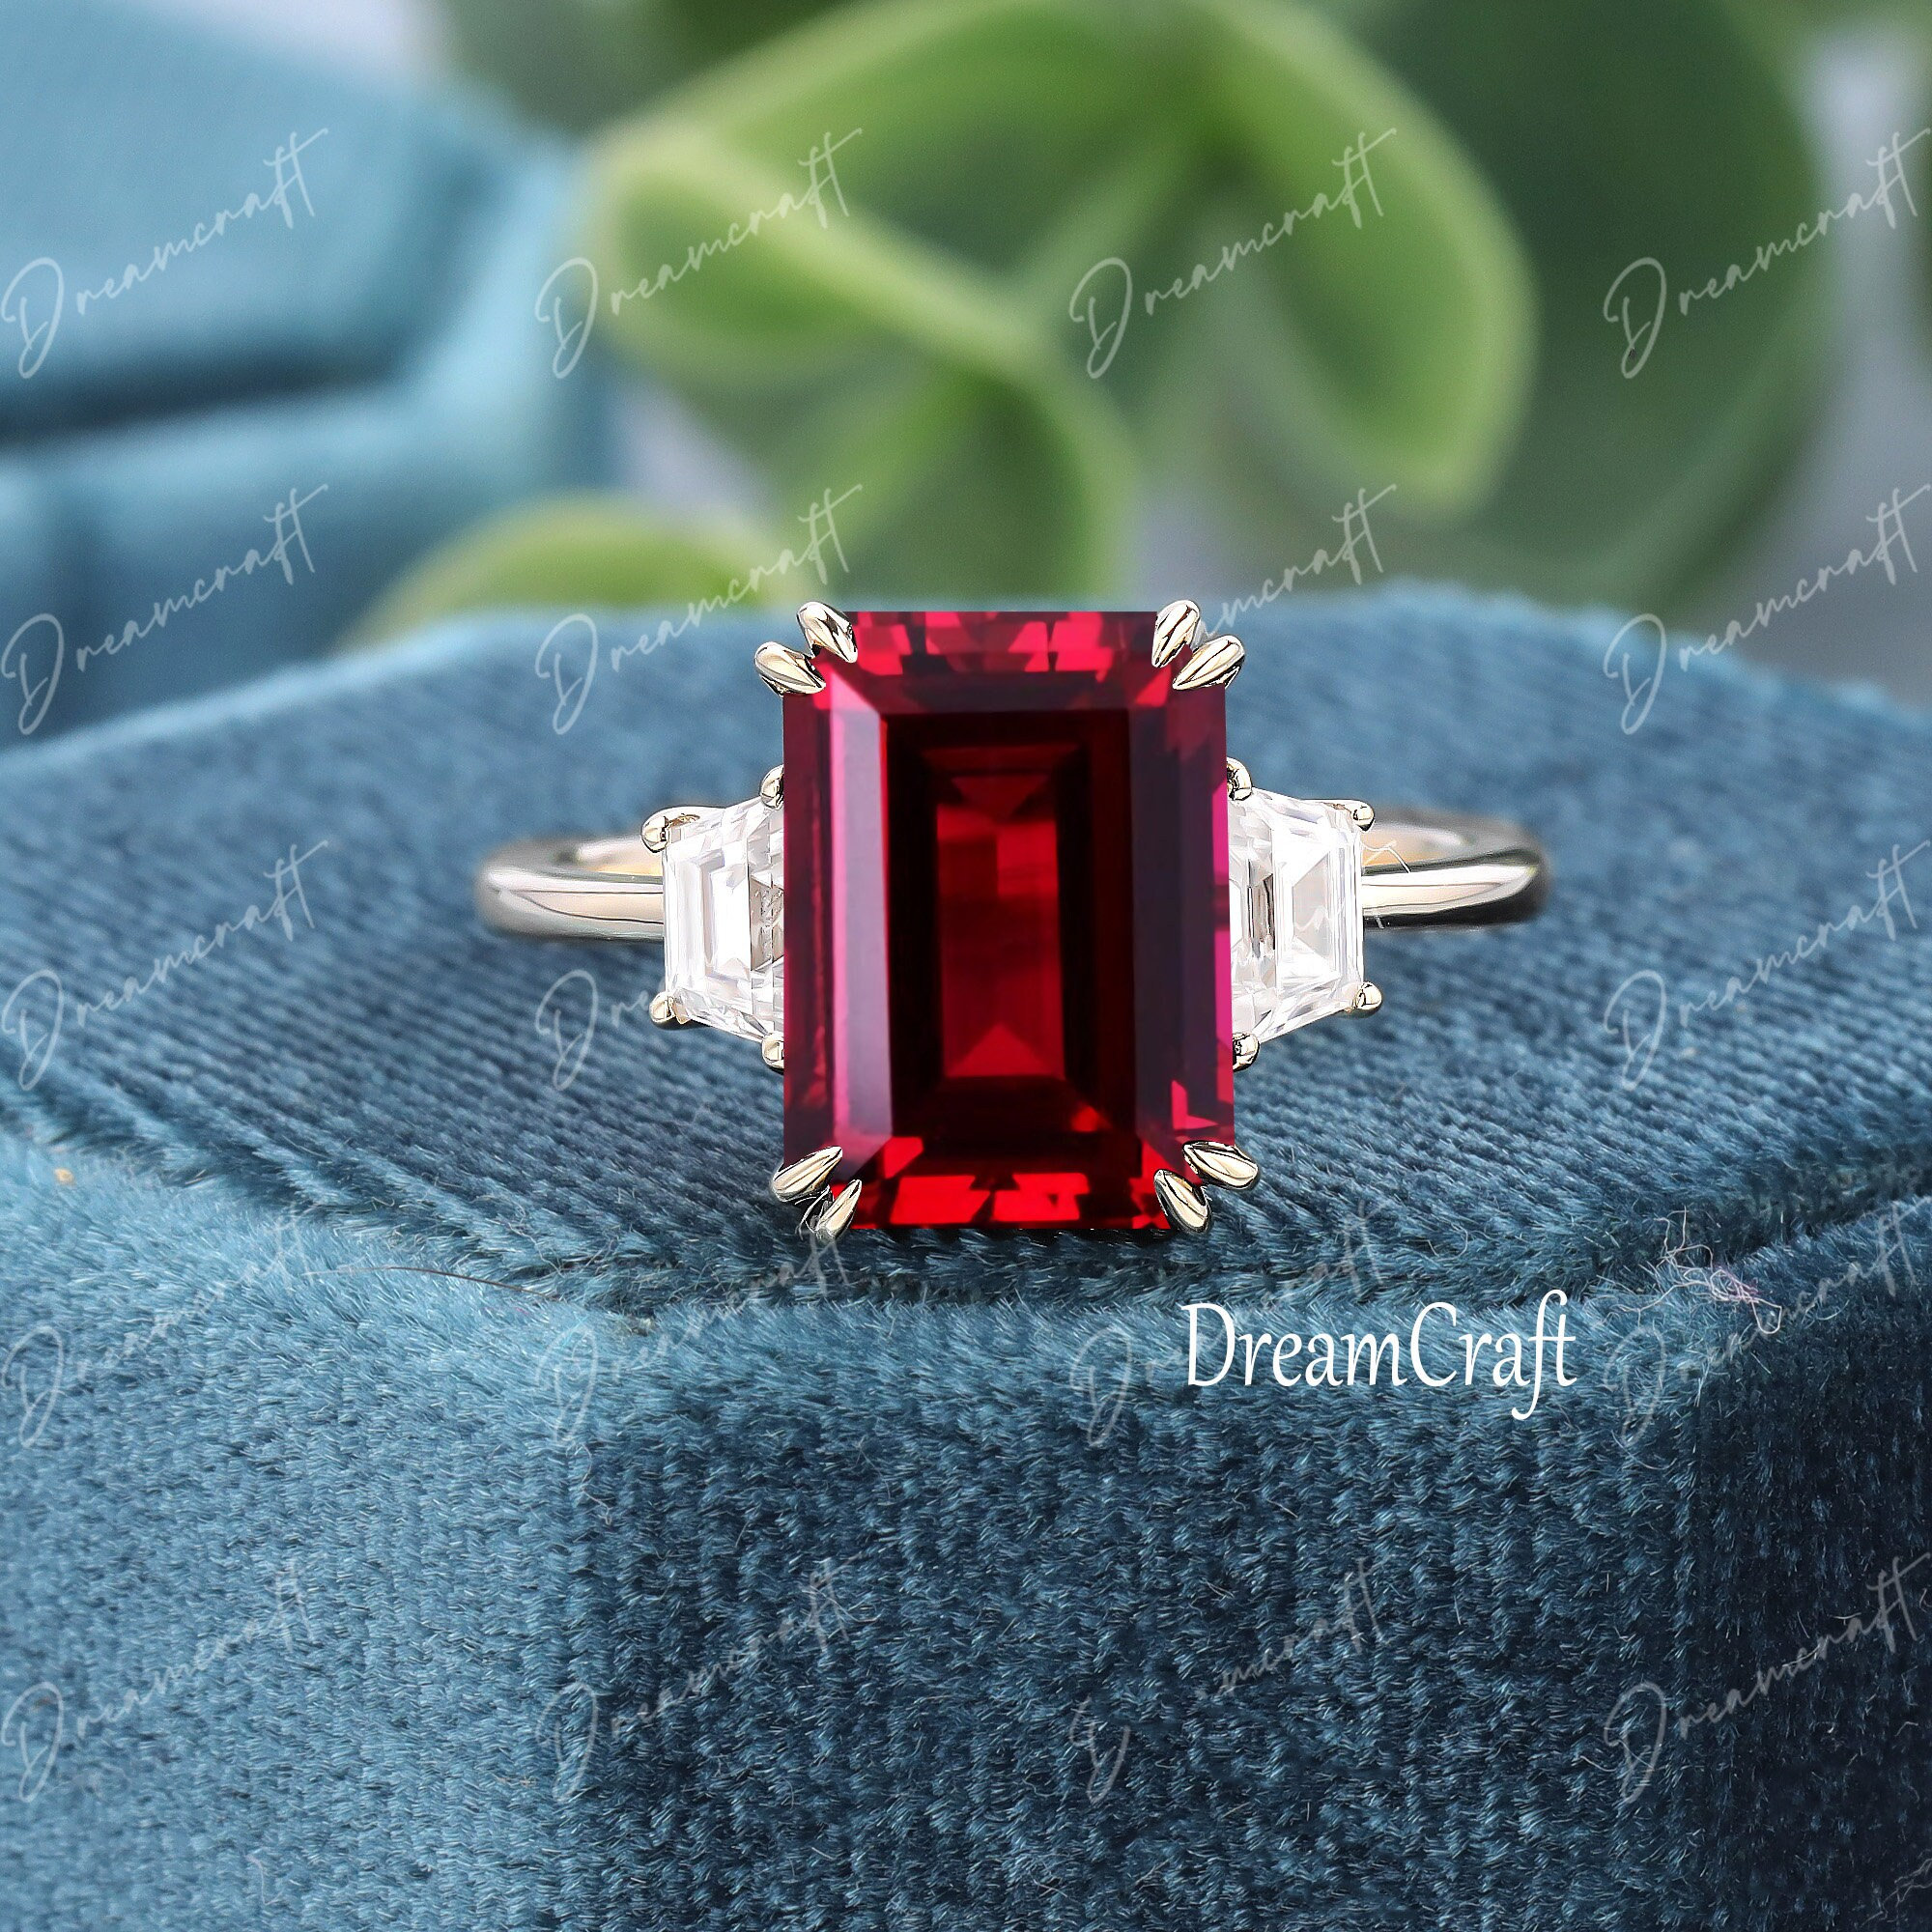 Natural Ruby Engagement Ring, July Birthstone Ring - Shraddha Shree Gems